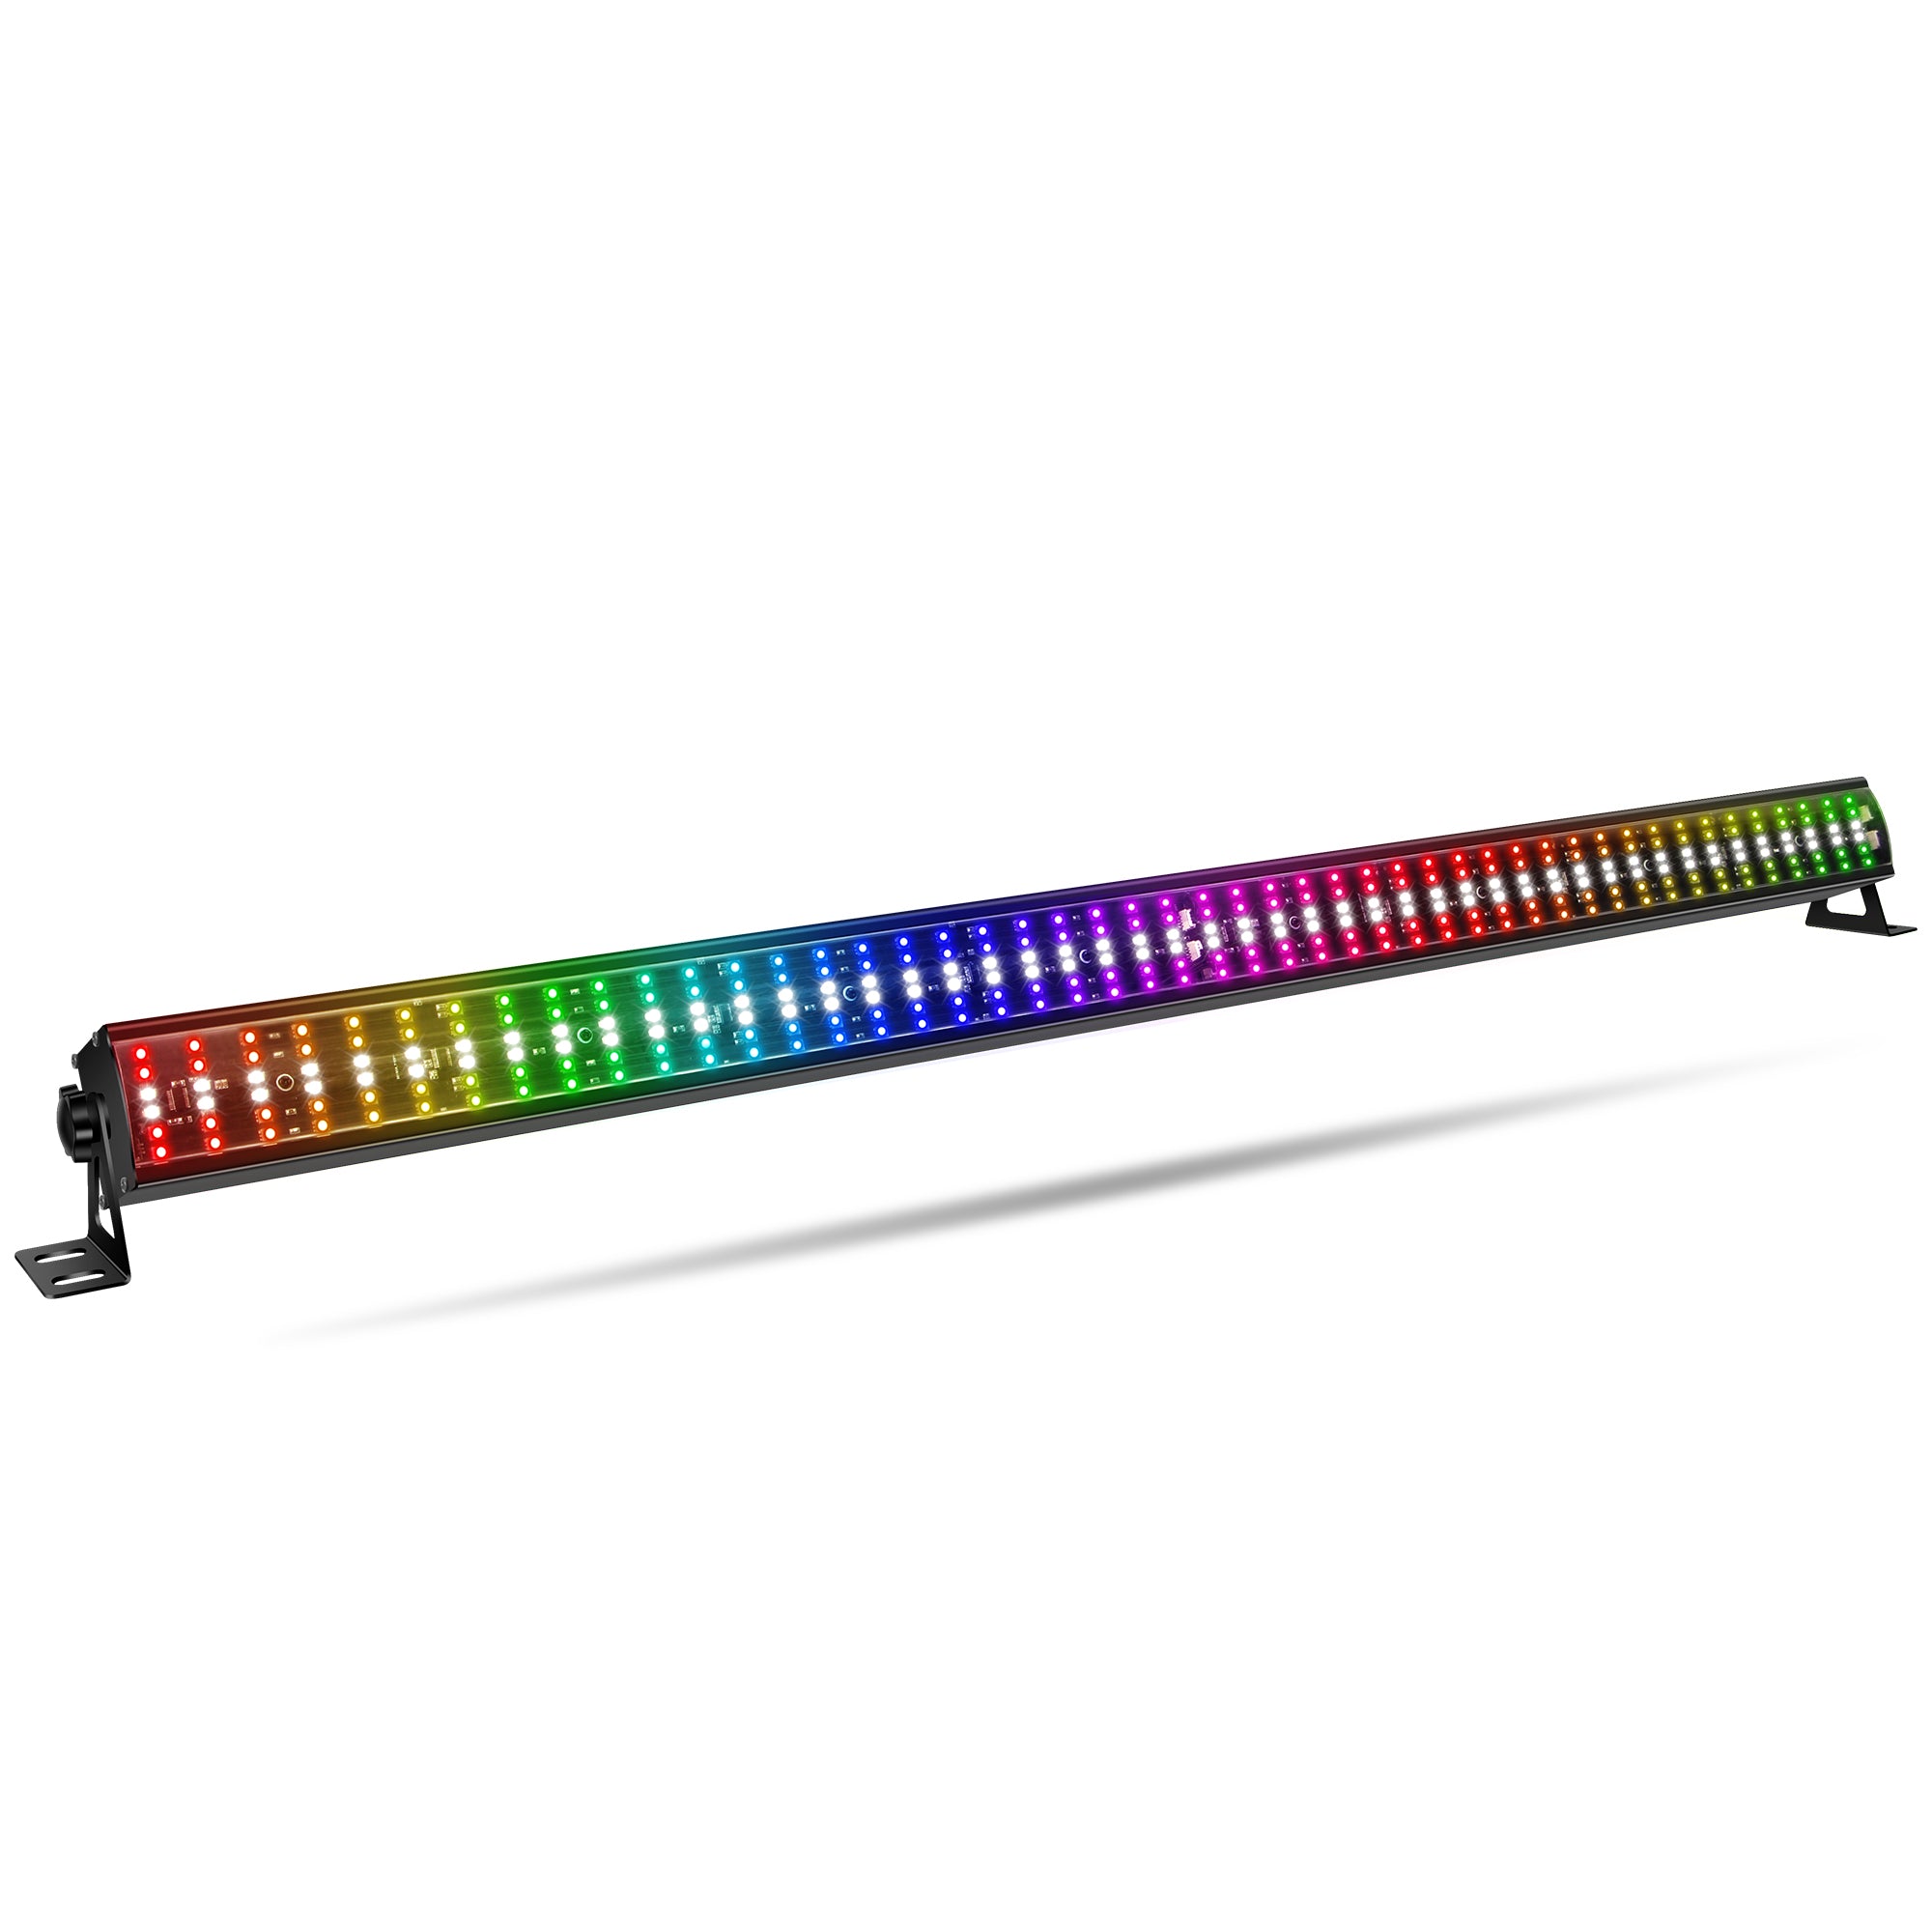 Shop 100W DJ Light Bar with 288 RGB+W LEDs for Performance Lighting